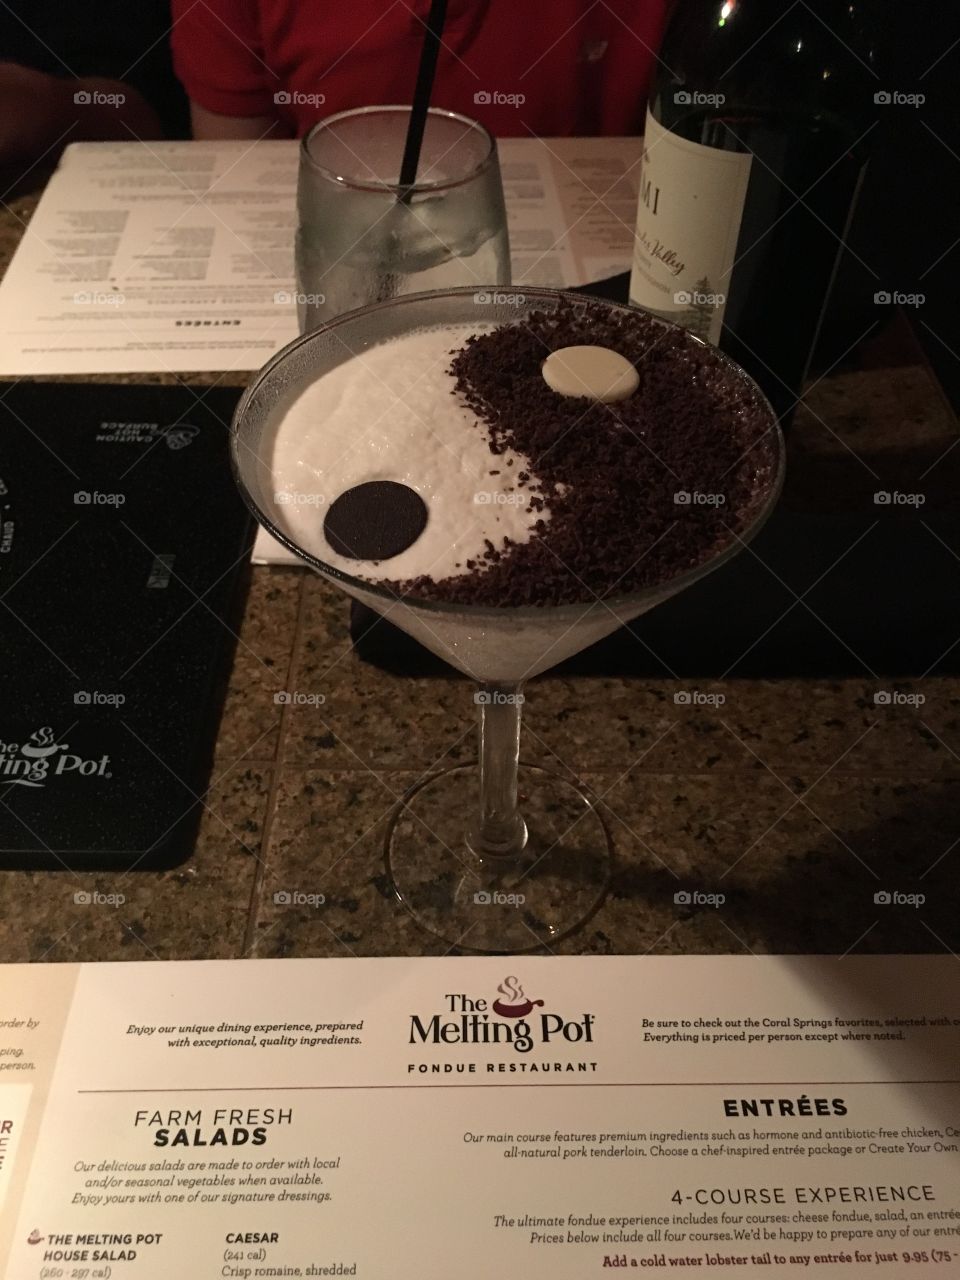 Yin and yang martini